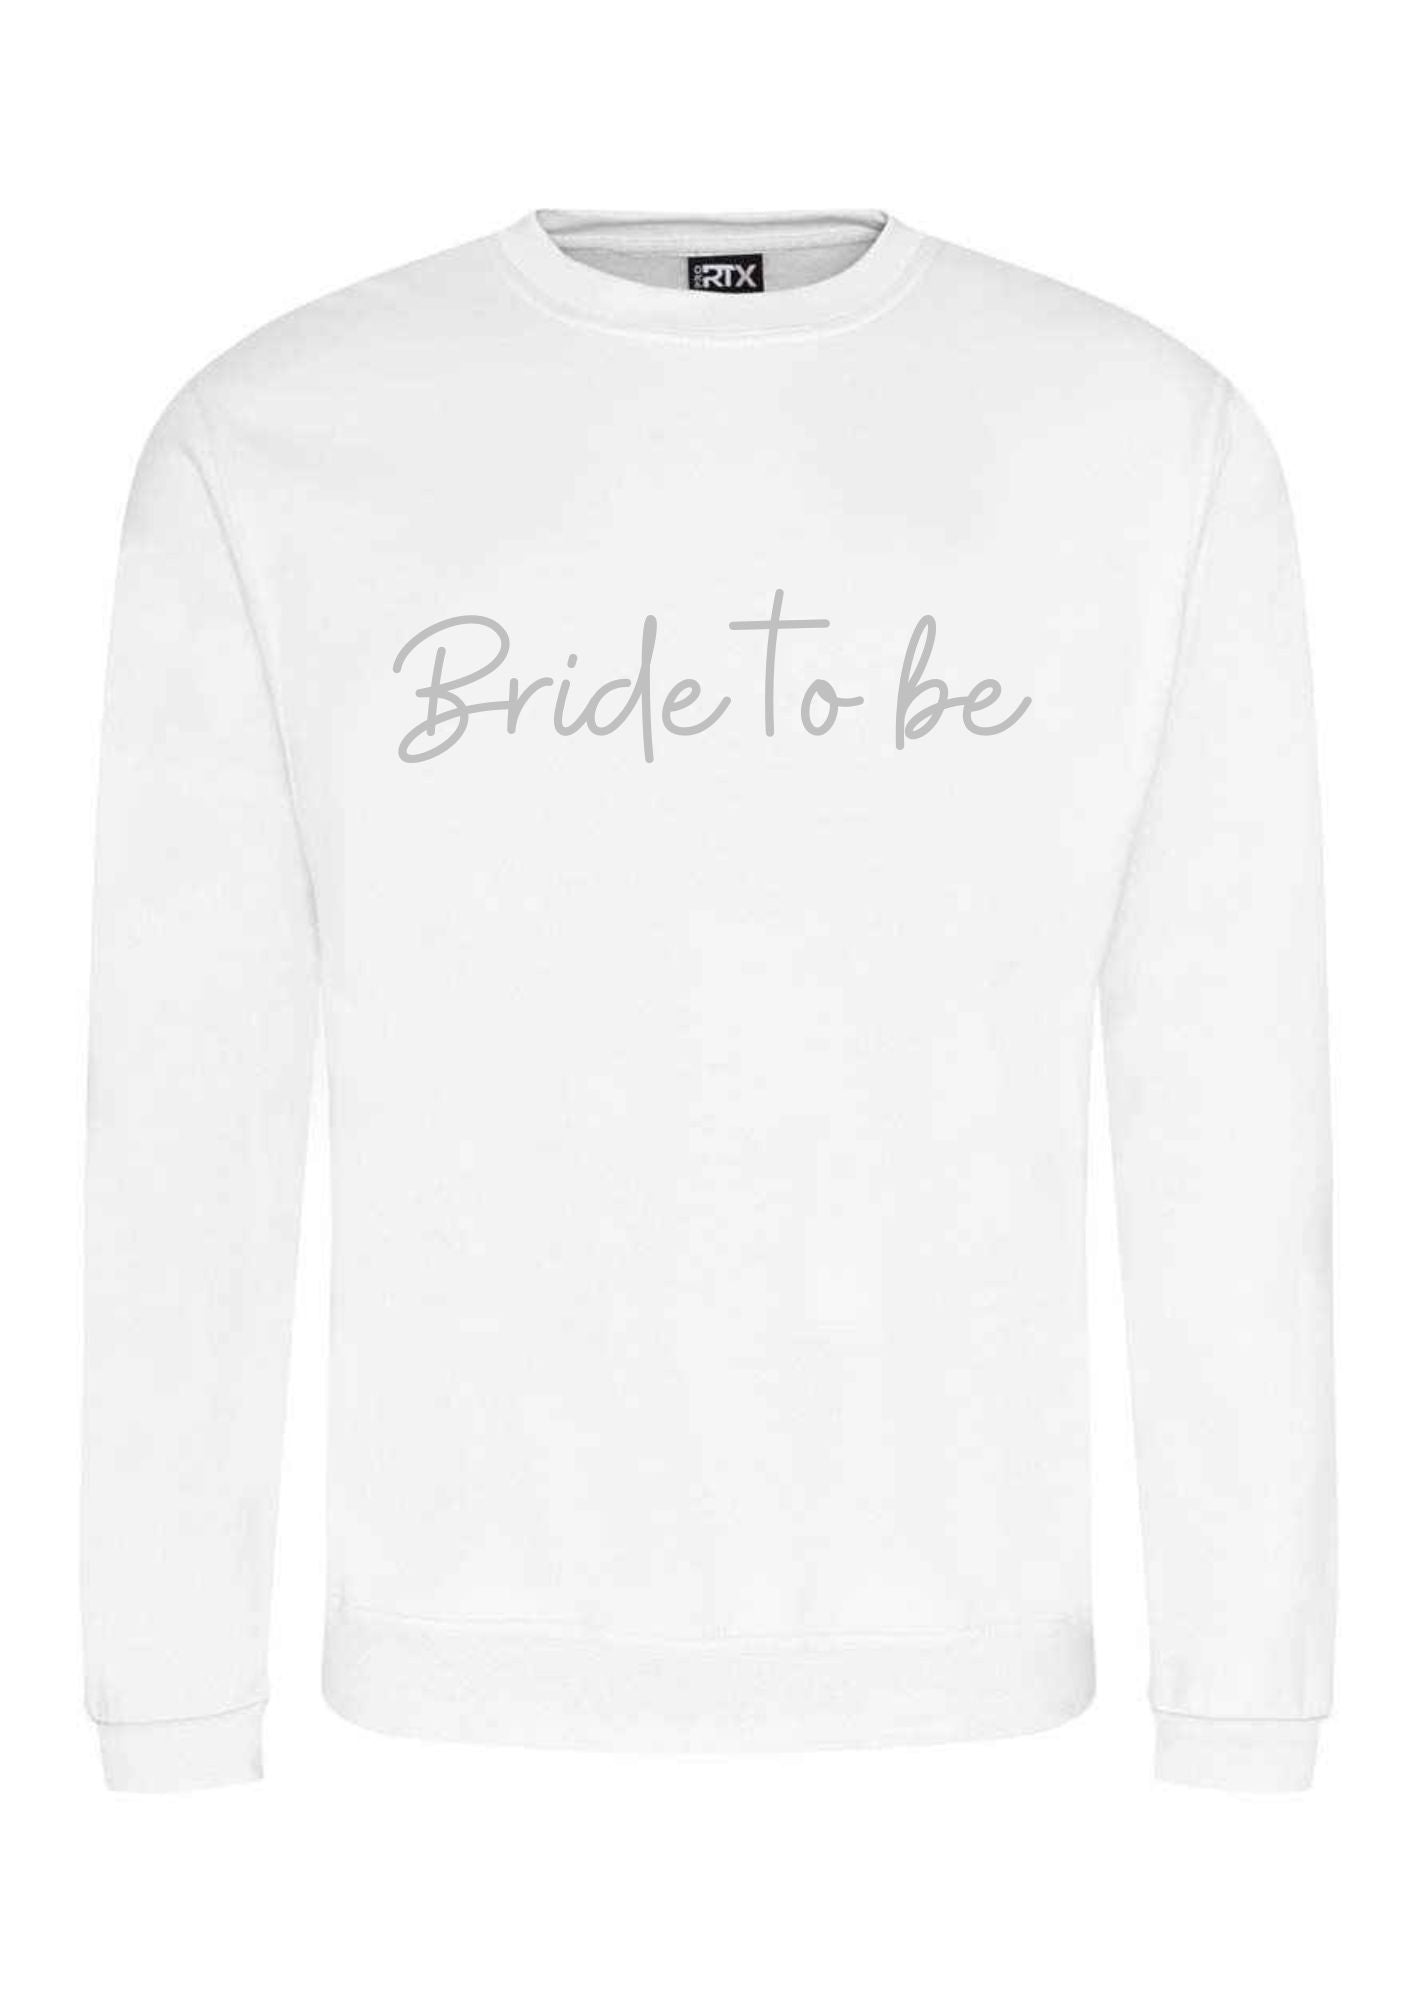 Bride to be sweatshirt